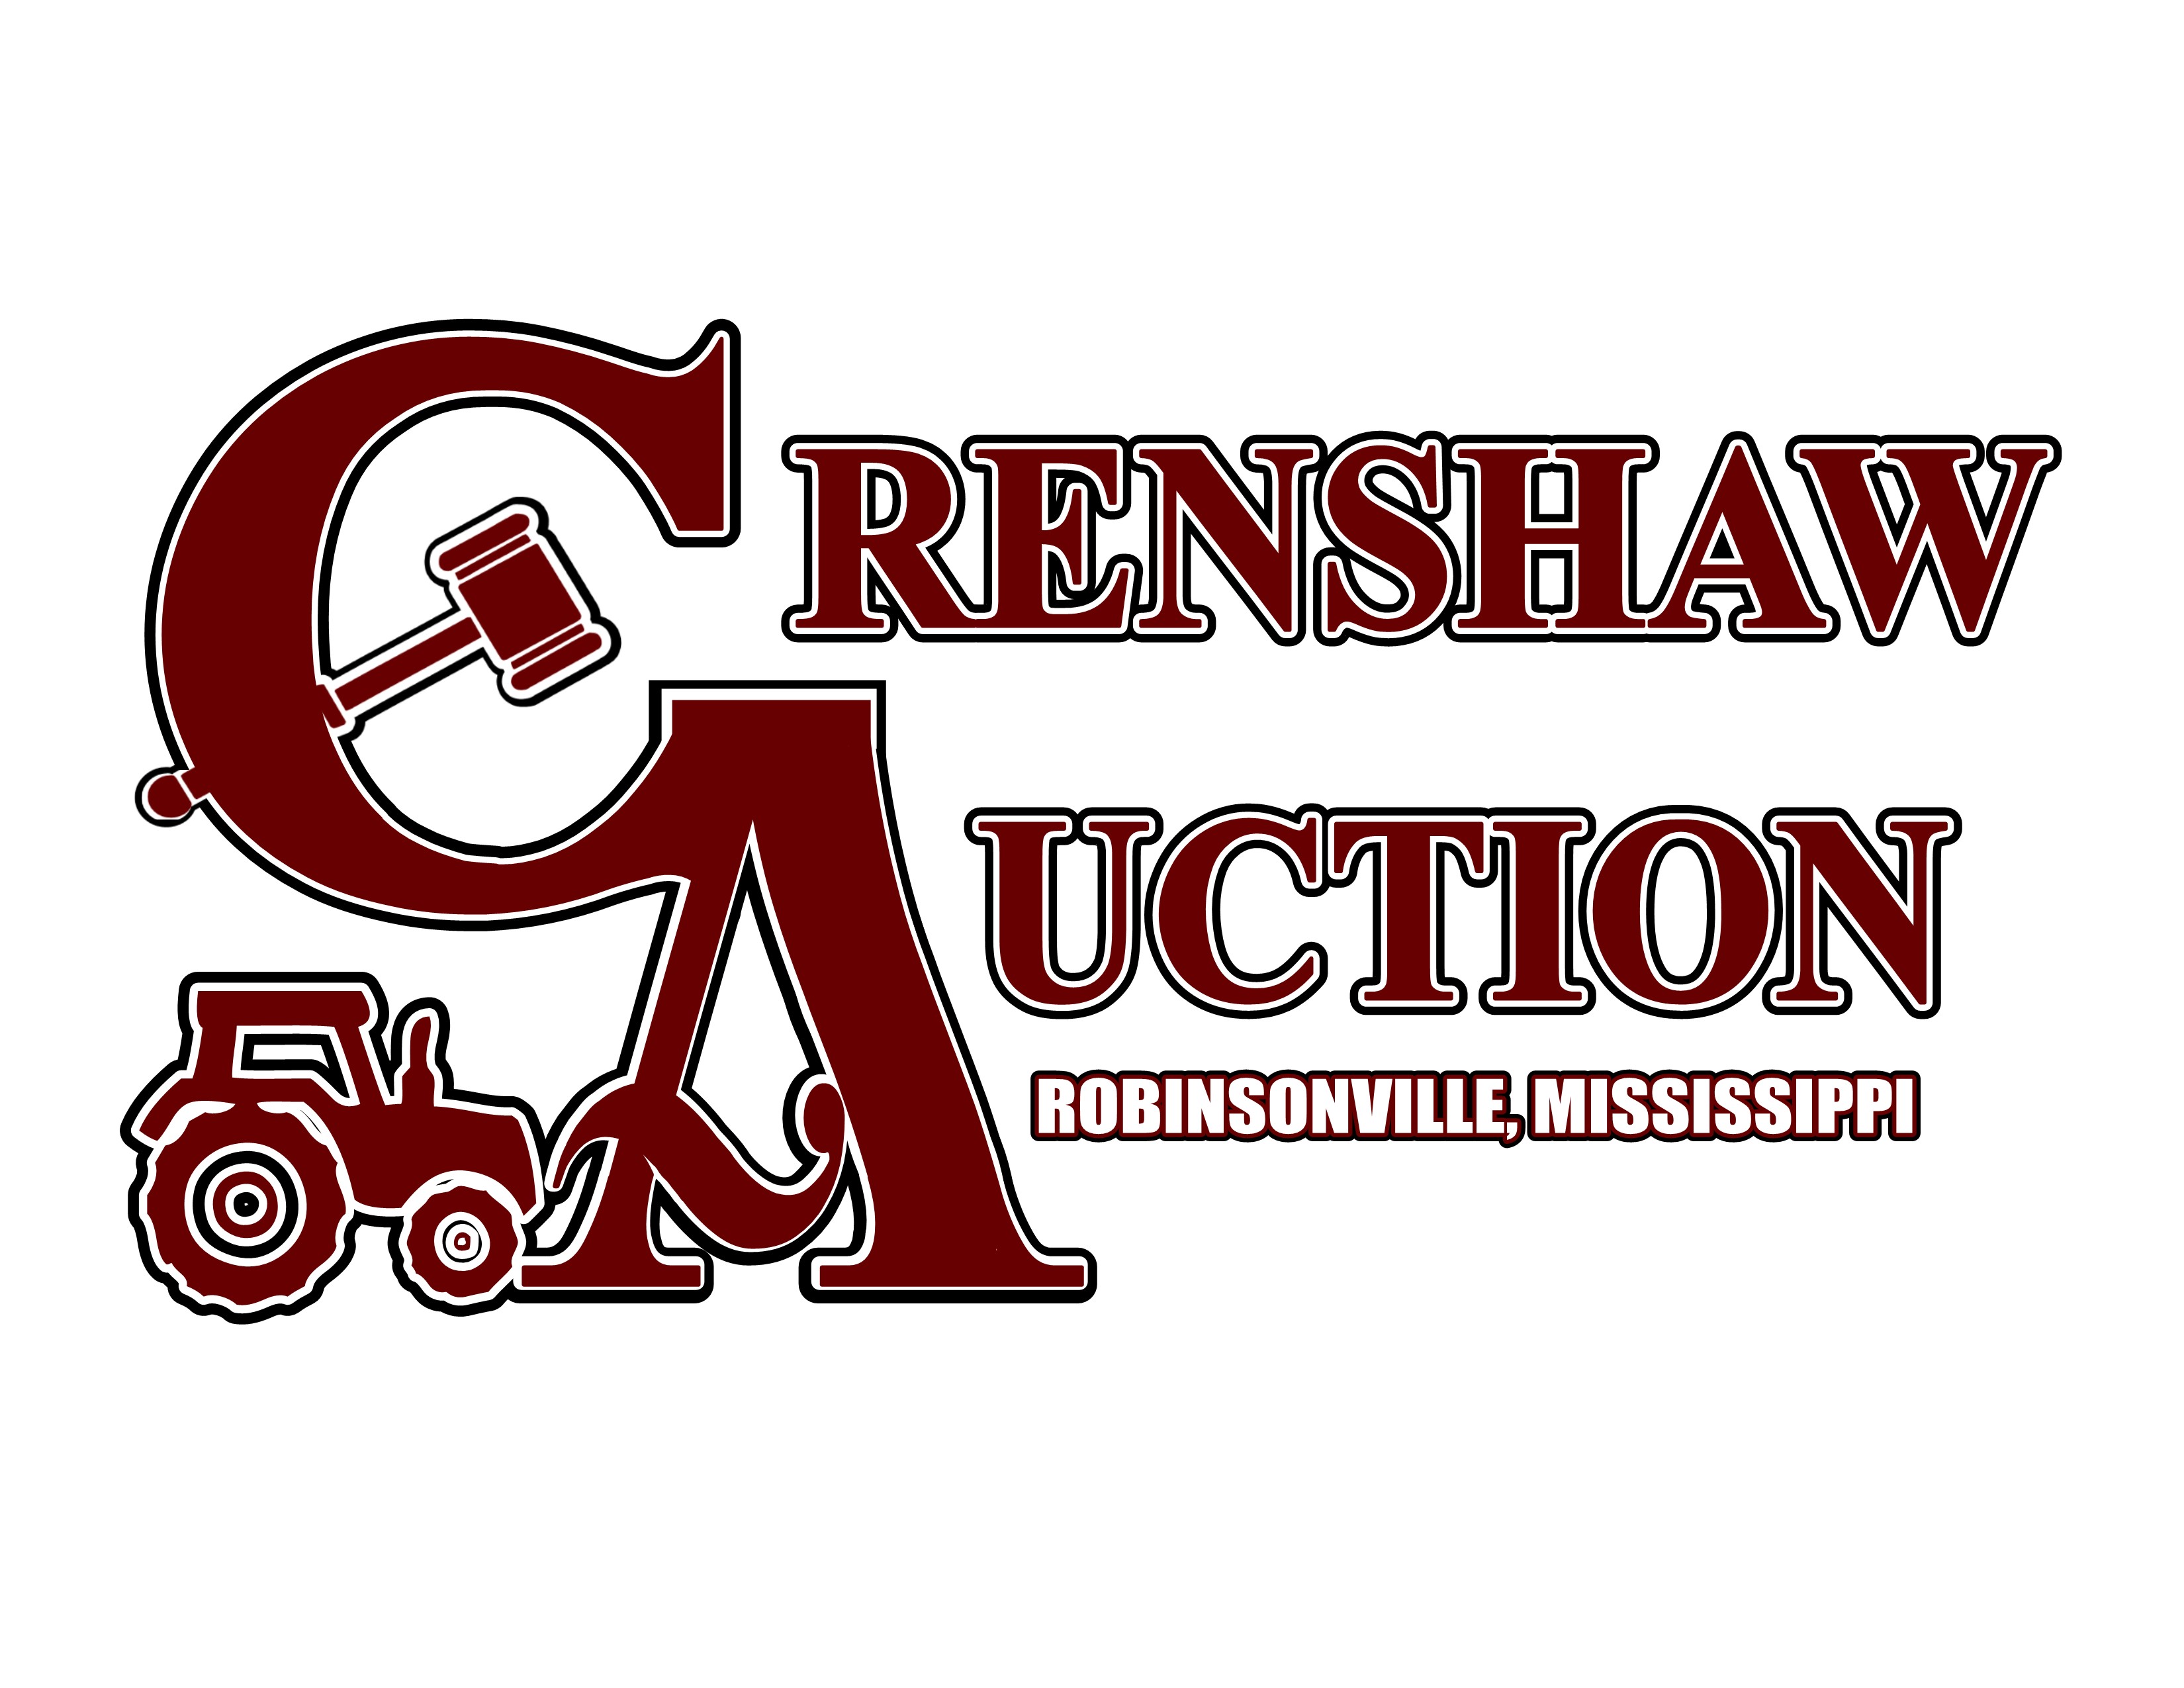 Crenshaw Auction LLC